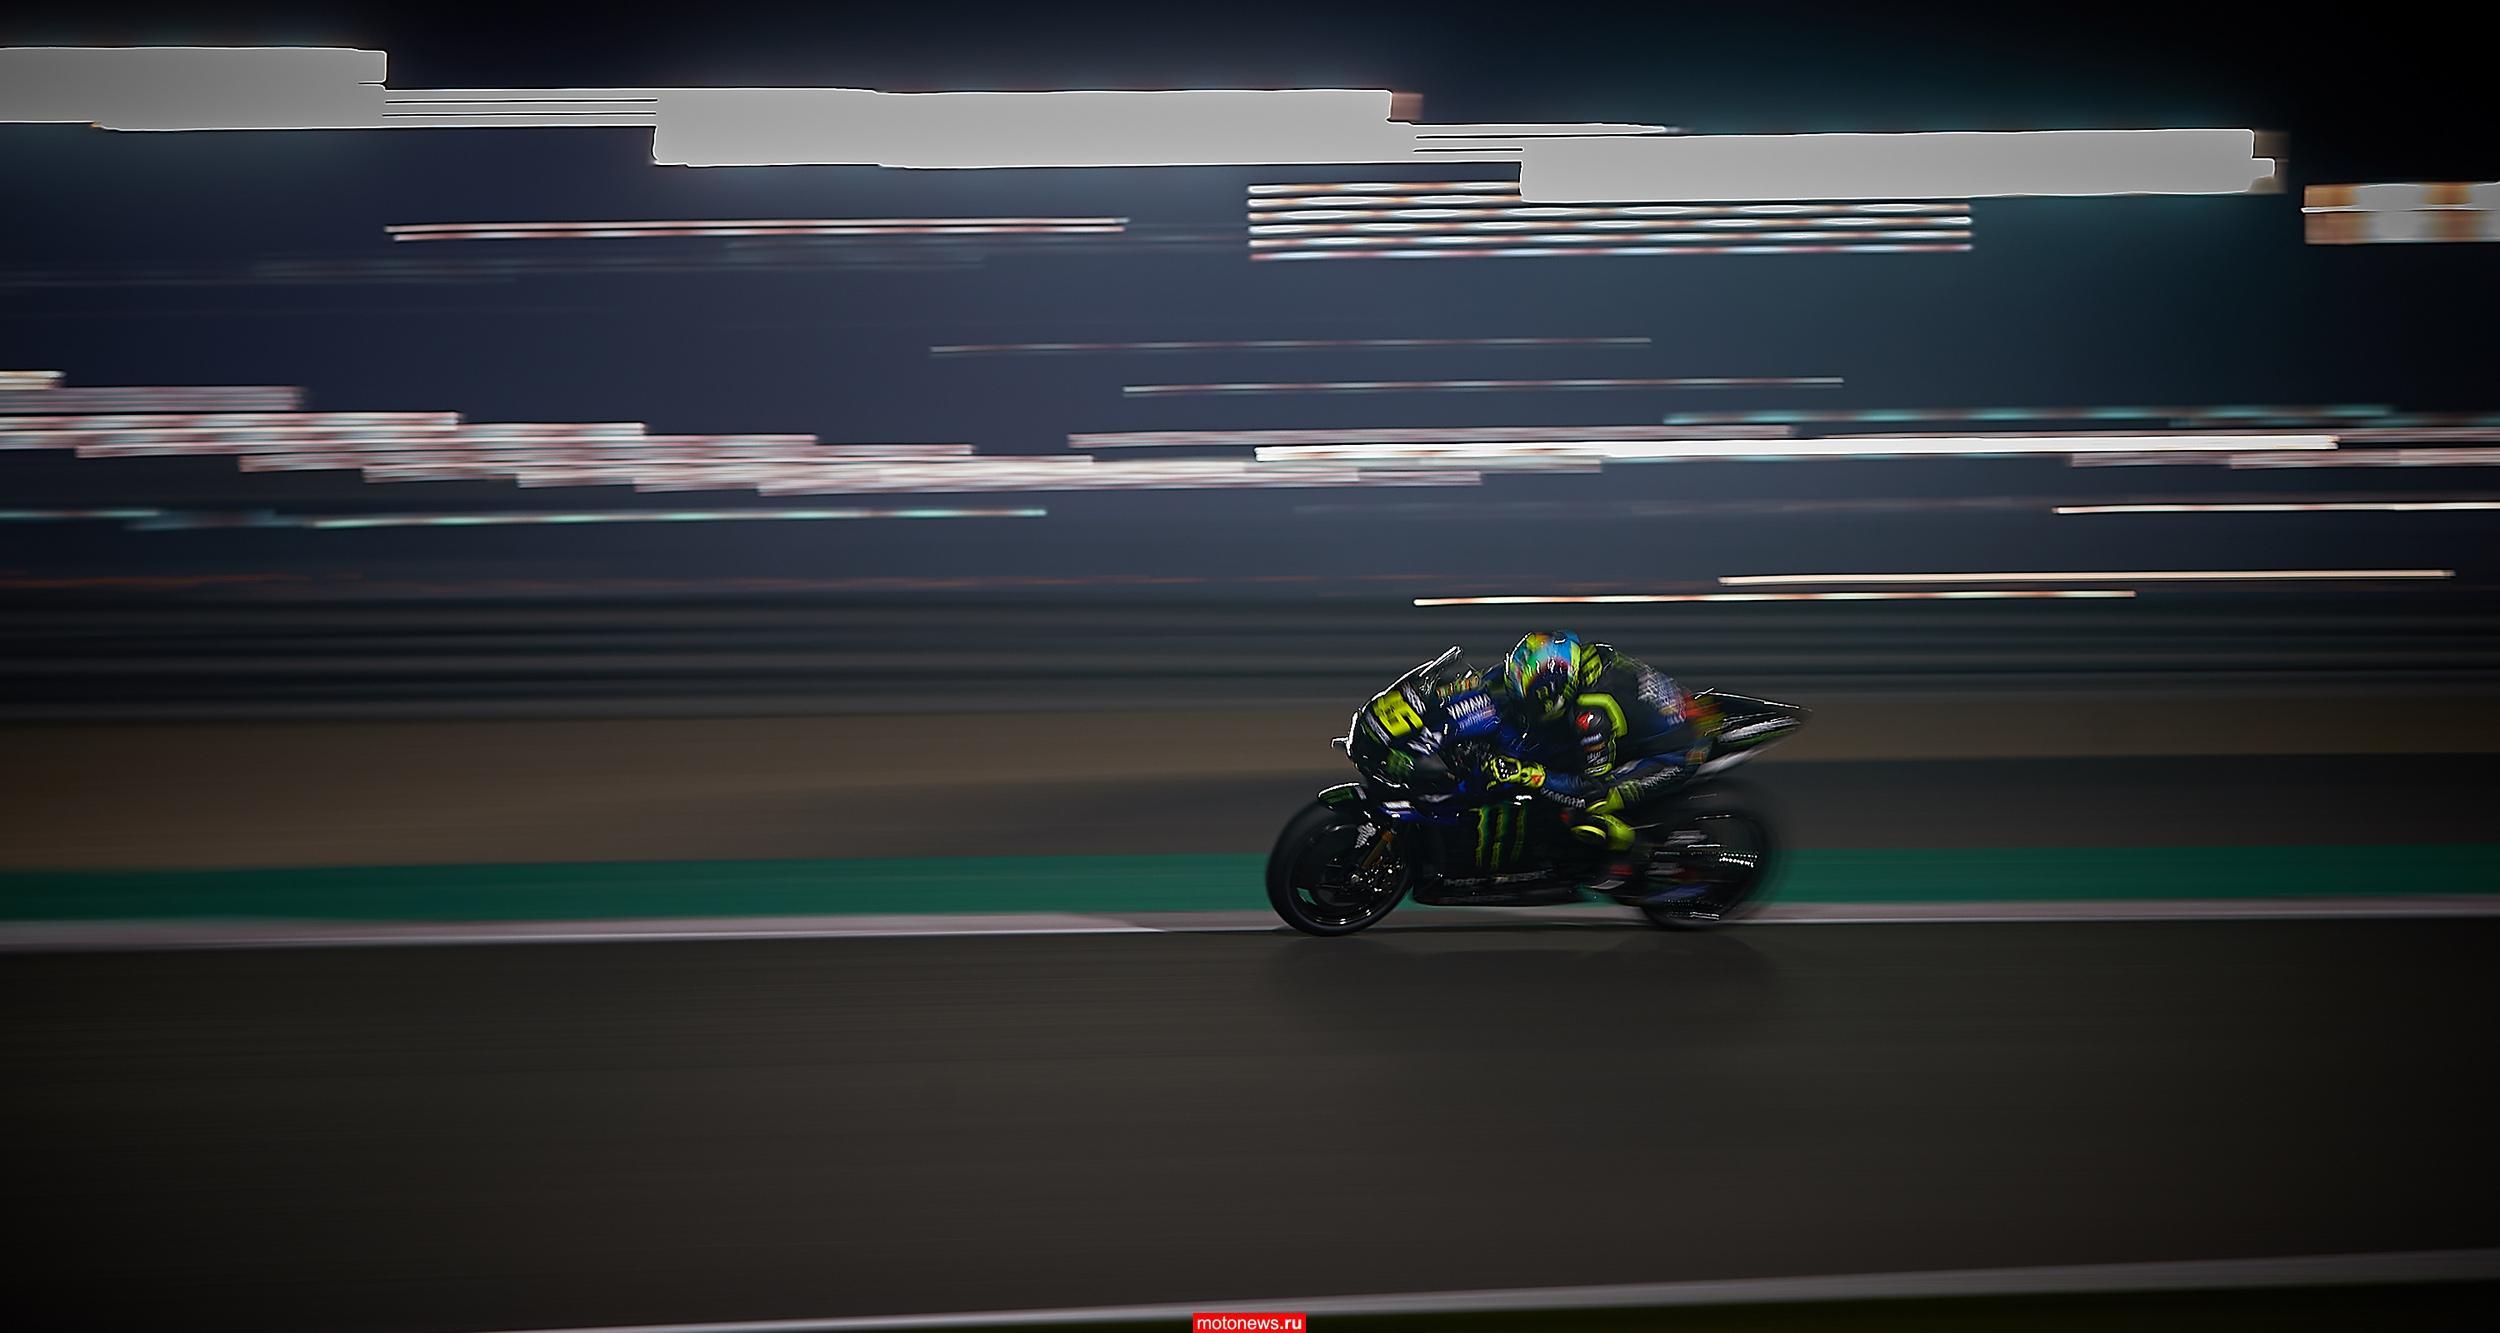 #MotoGP21